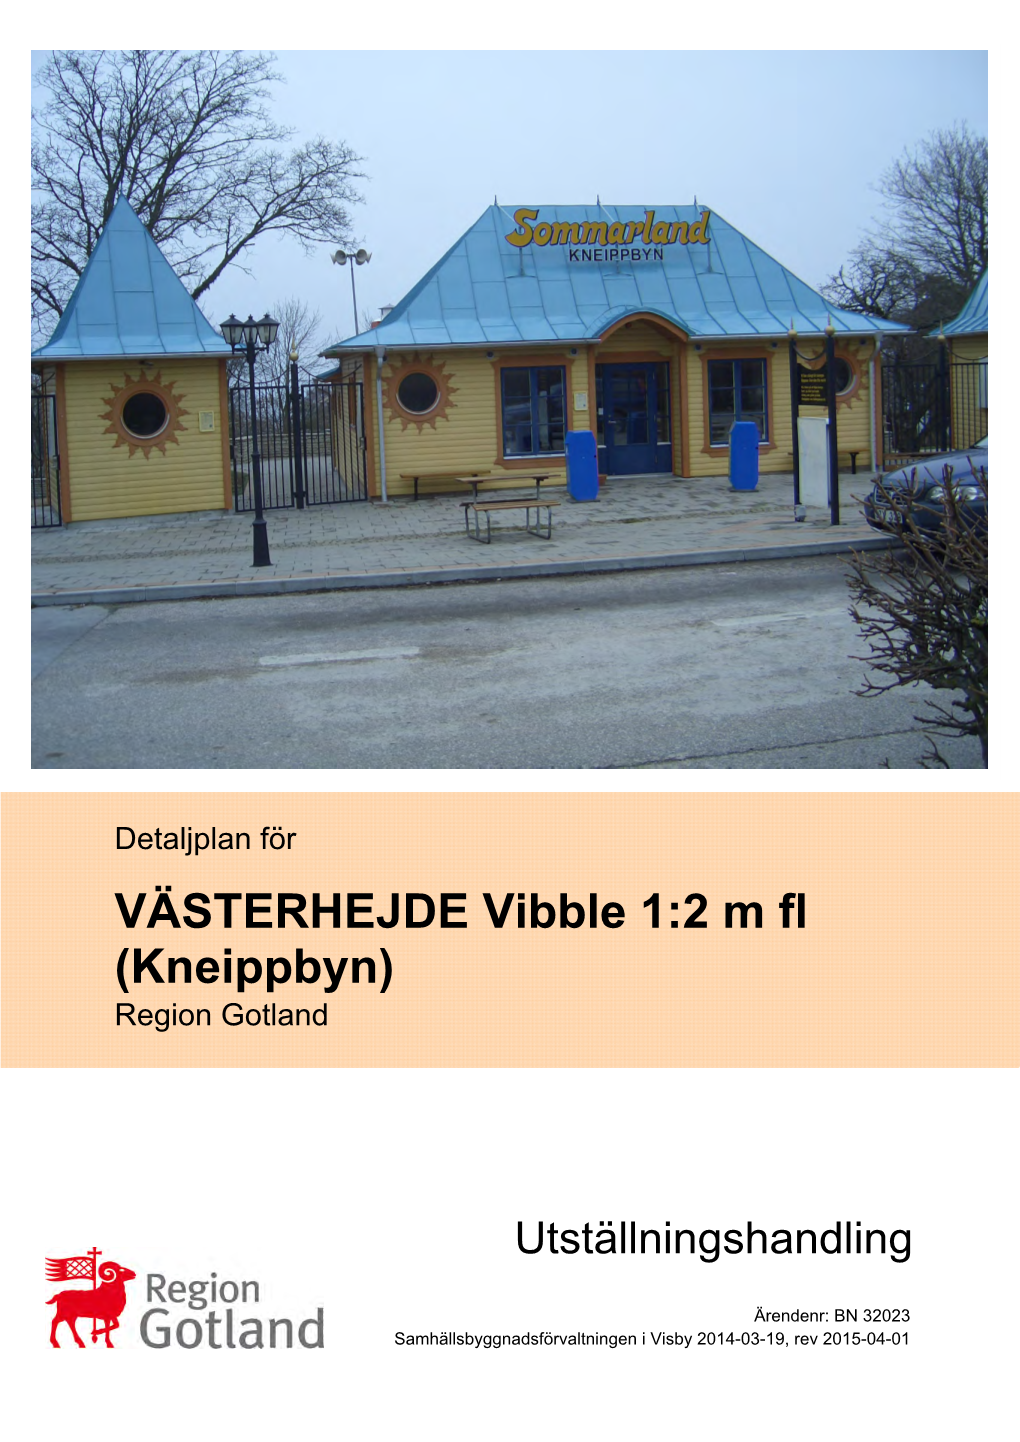 VÄSTERHEJDE Vibble 1:2 M Fl (Kneippbyn) Region Gotland